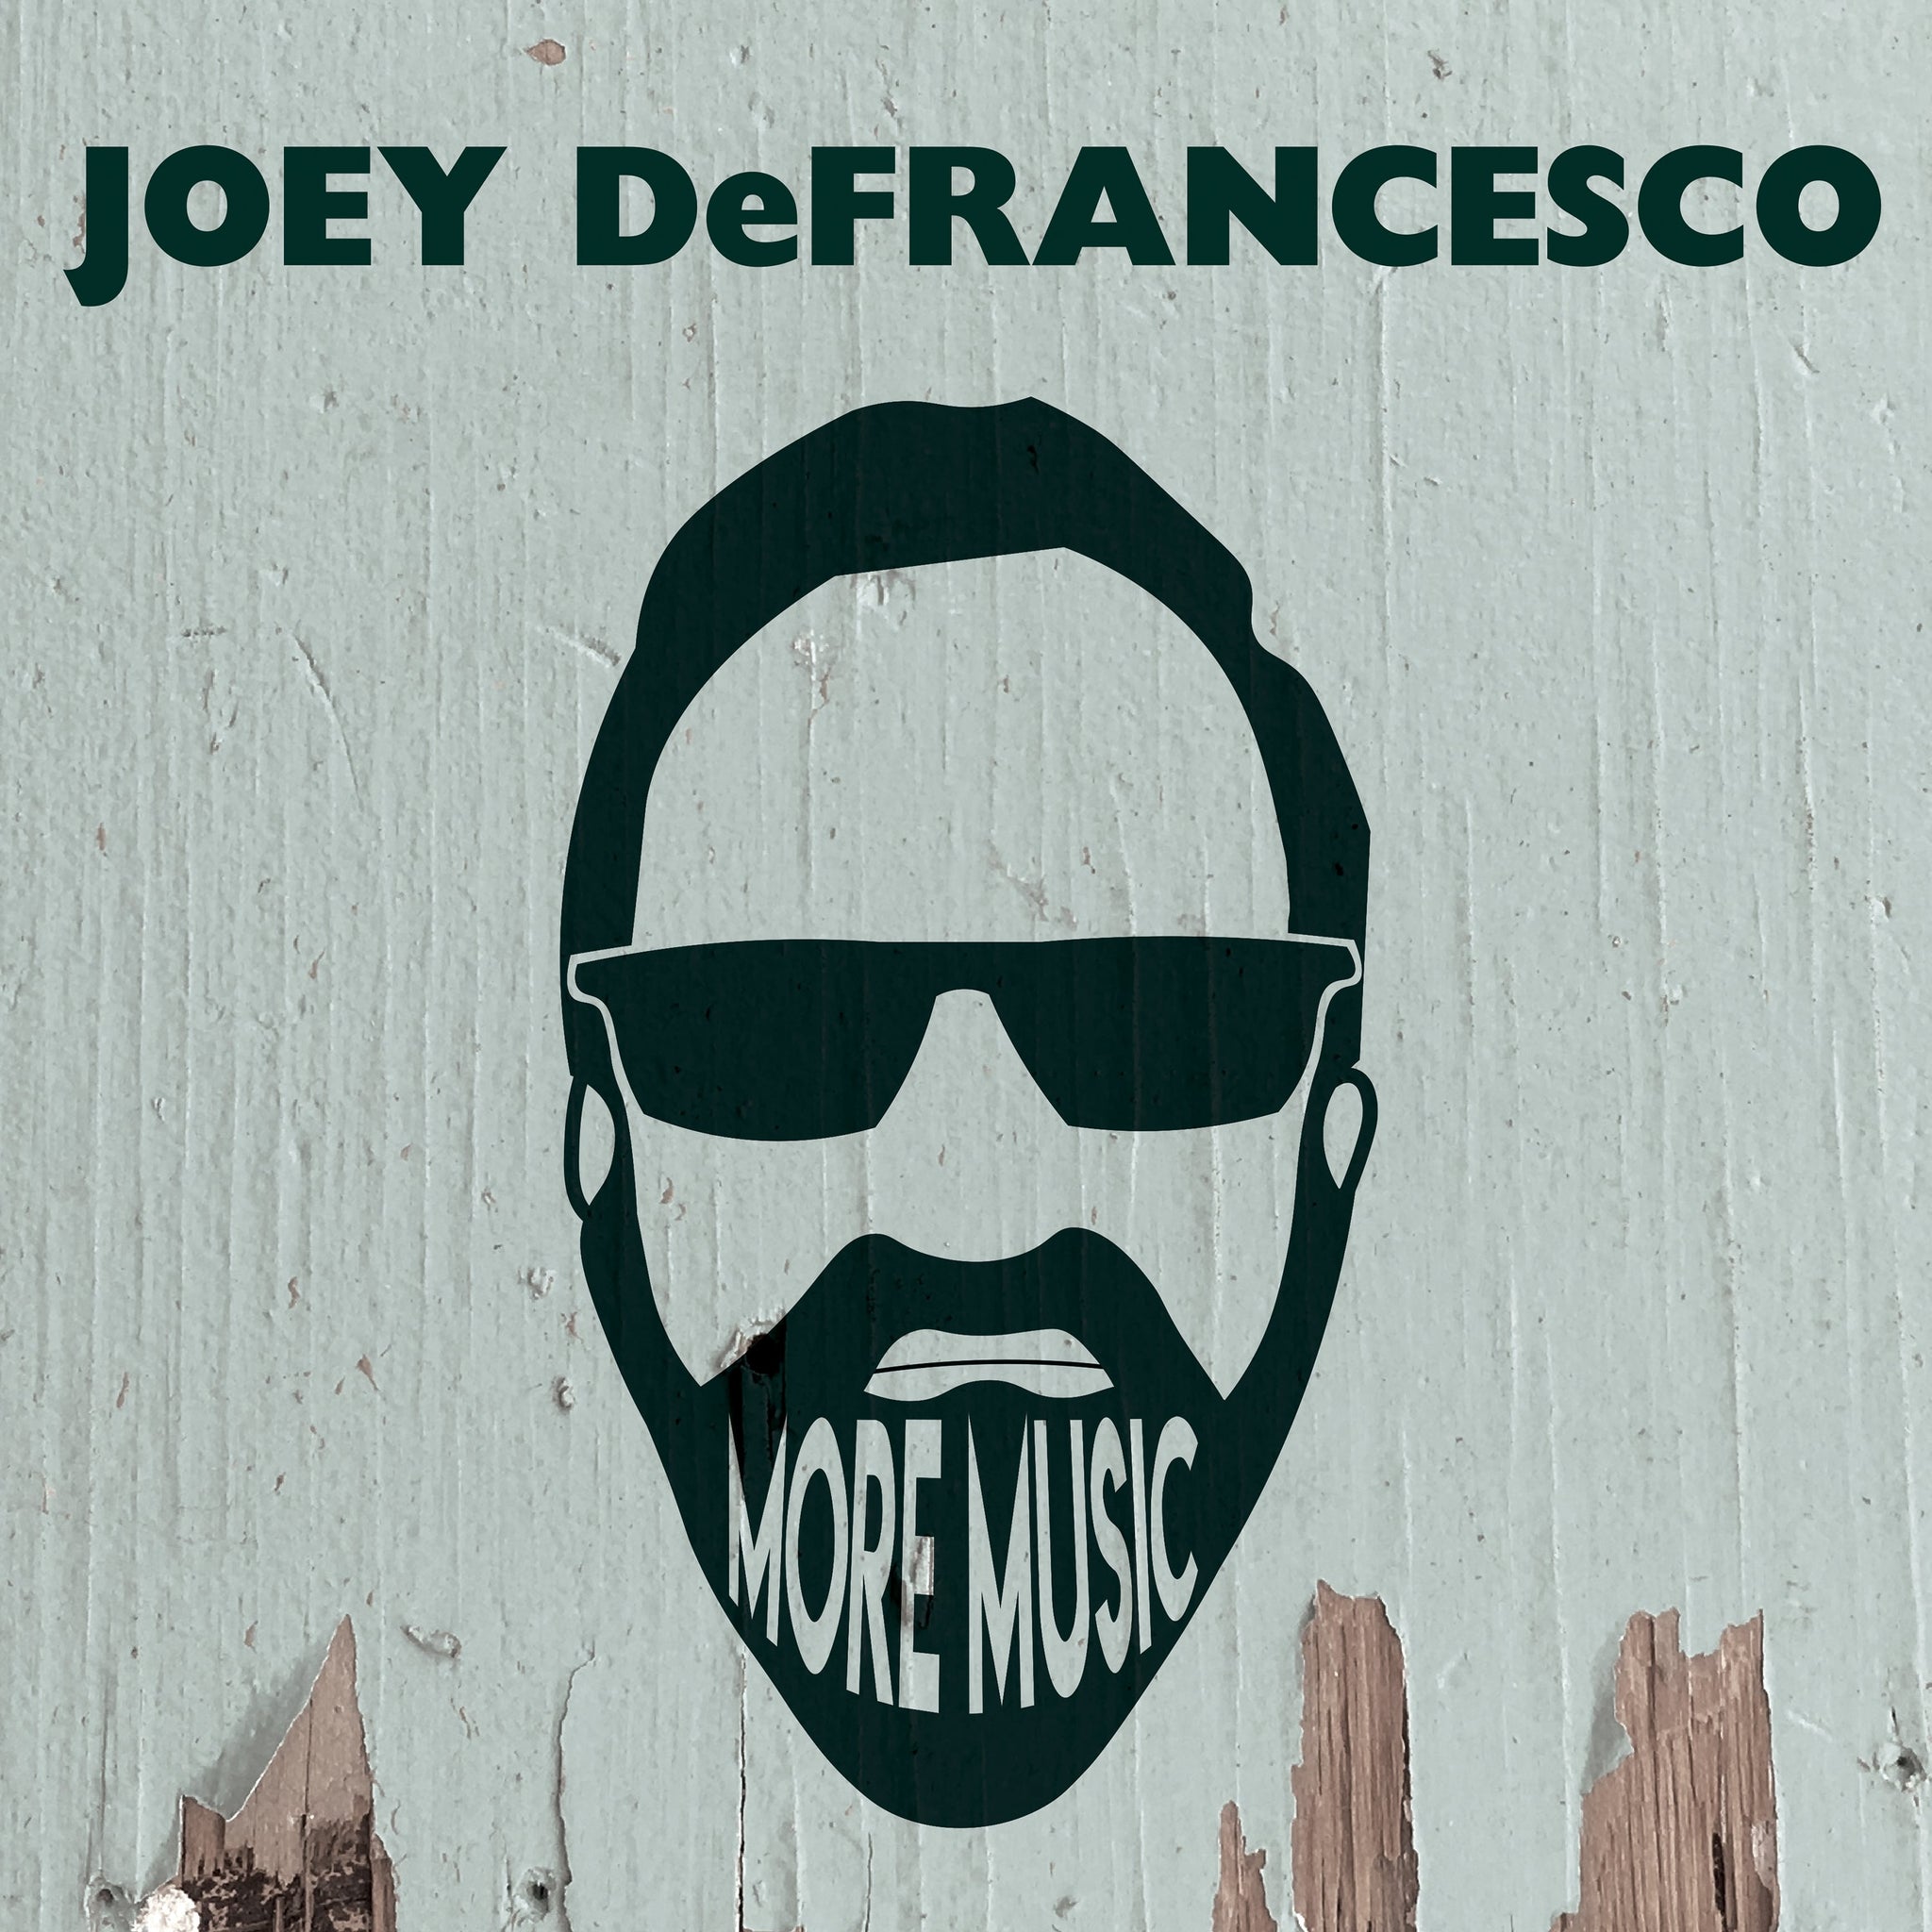 More Music - Joey DeFrancesco